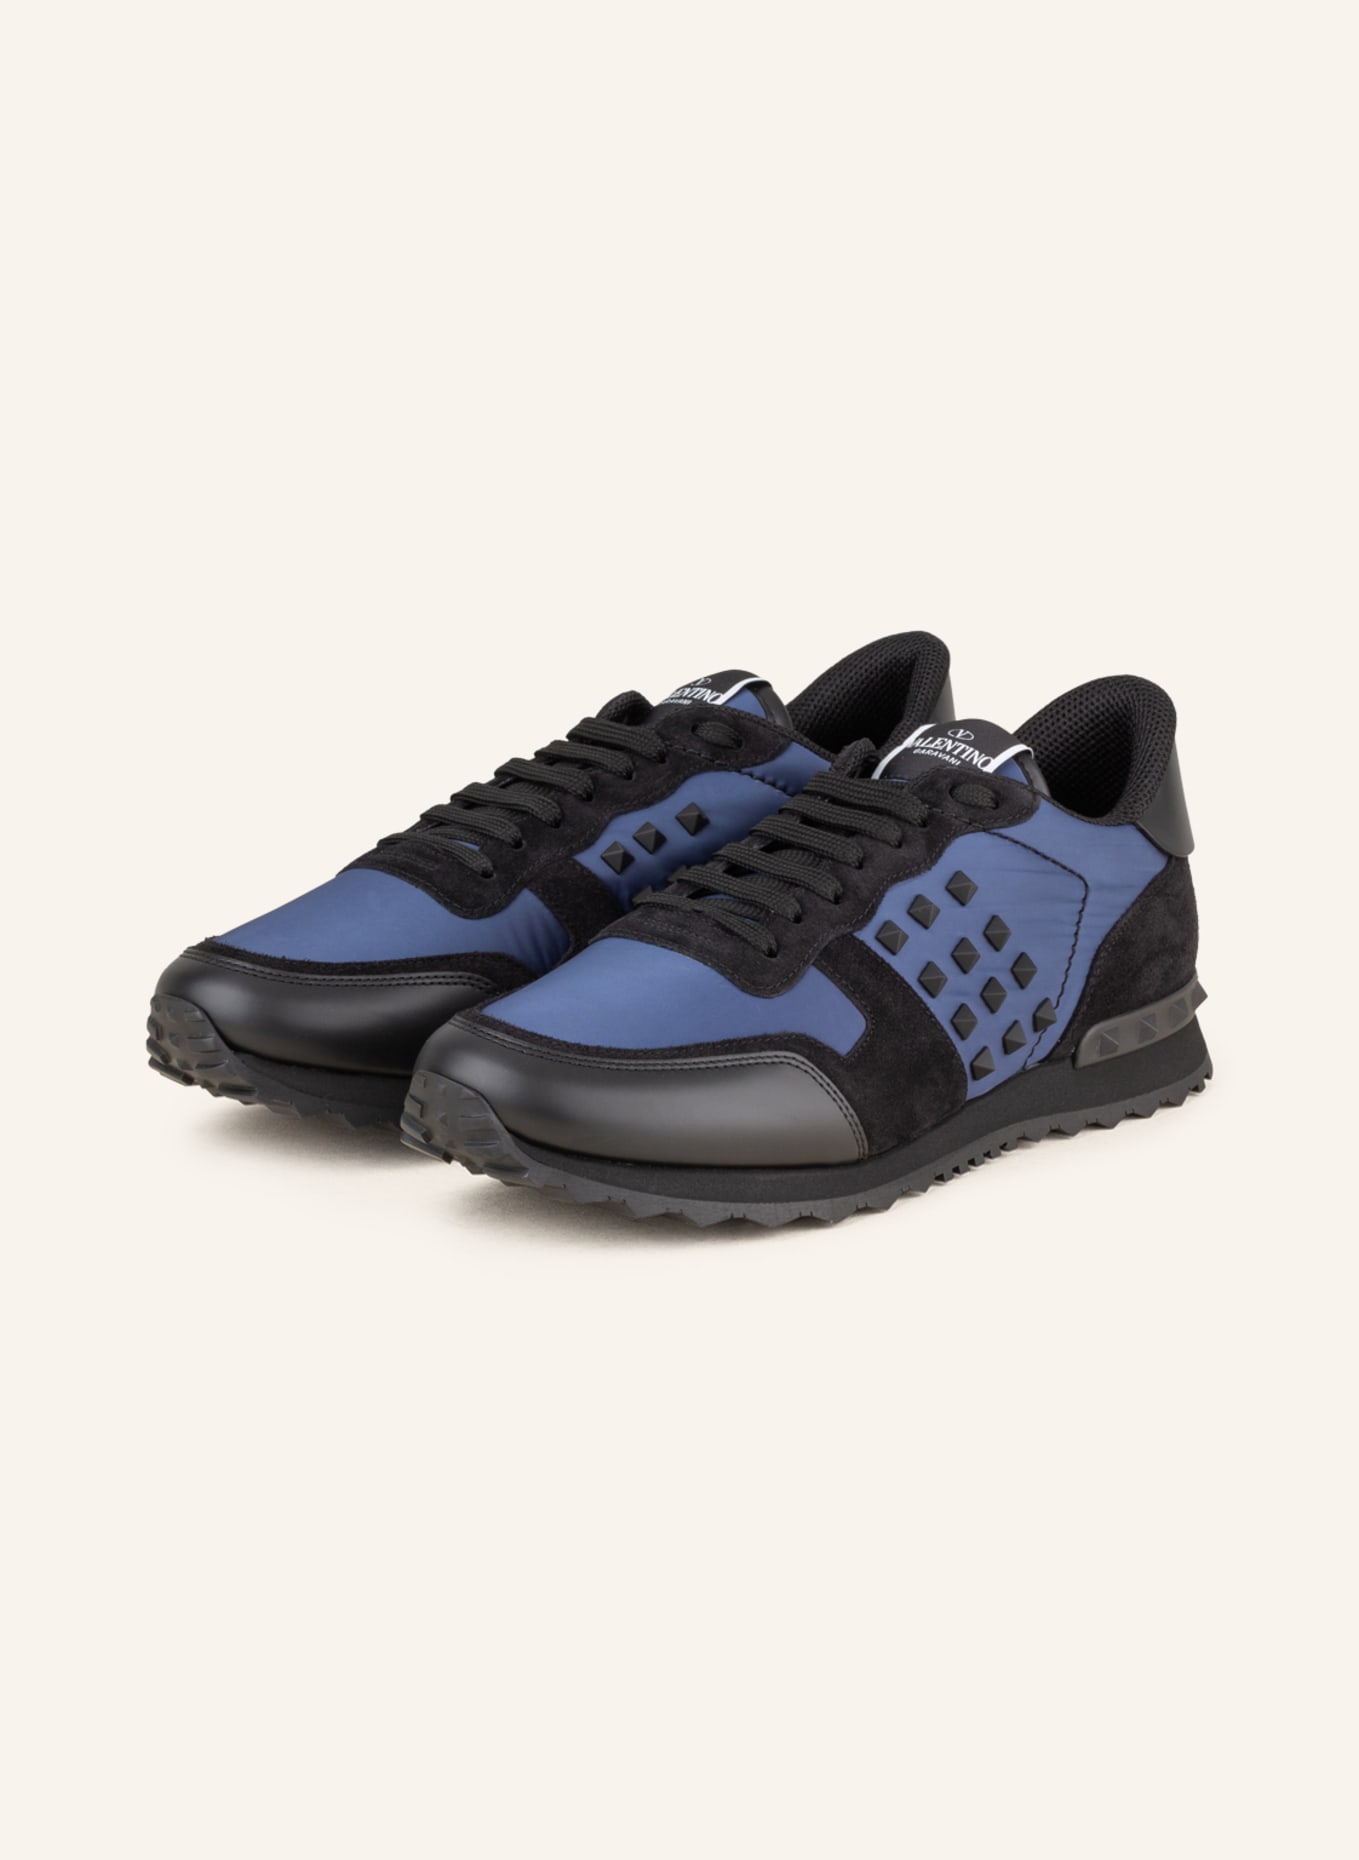 VALENTINO GARAVANI Sneakers ROCKSTUD in black/ blue